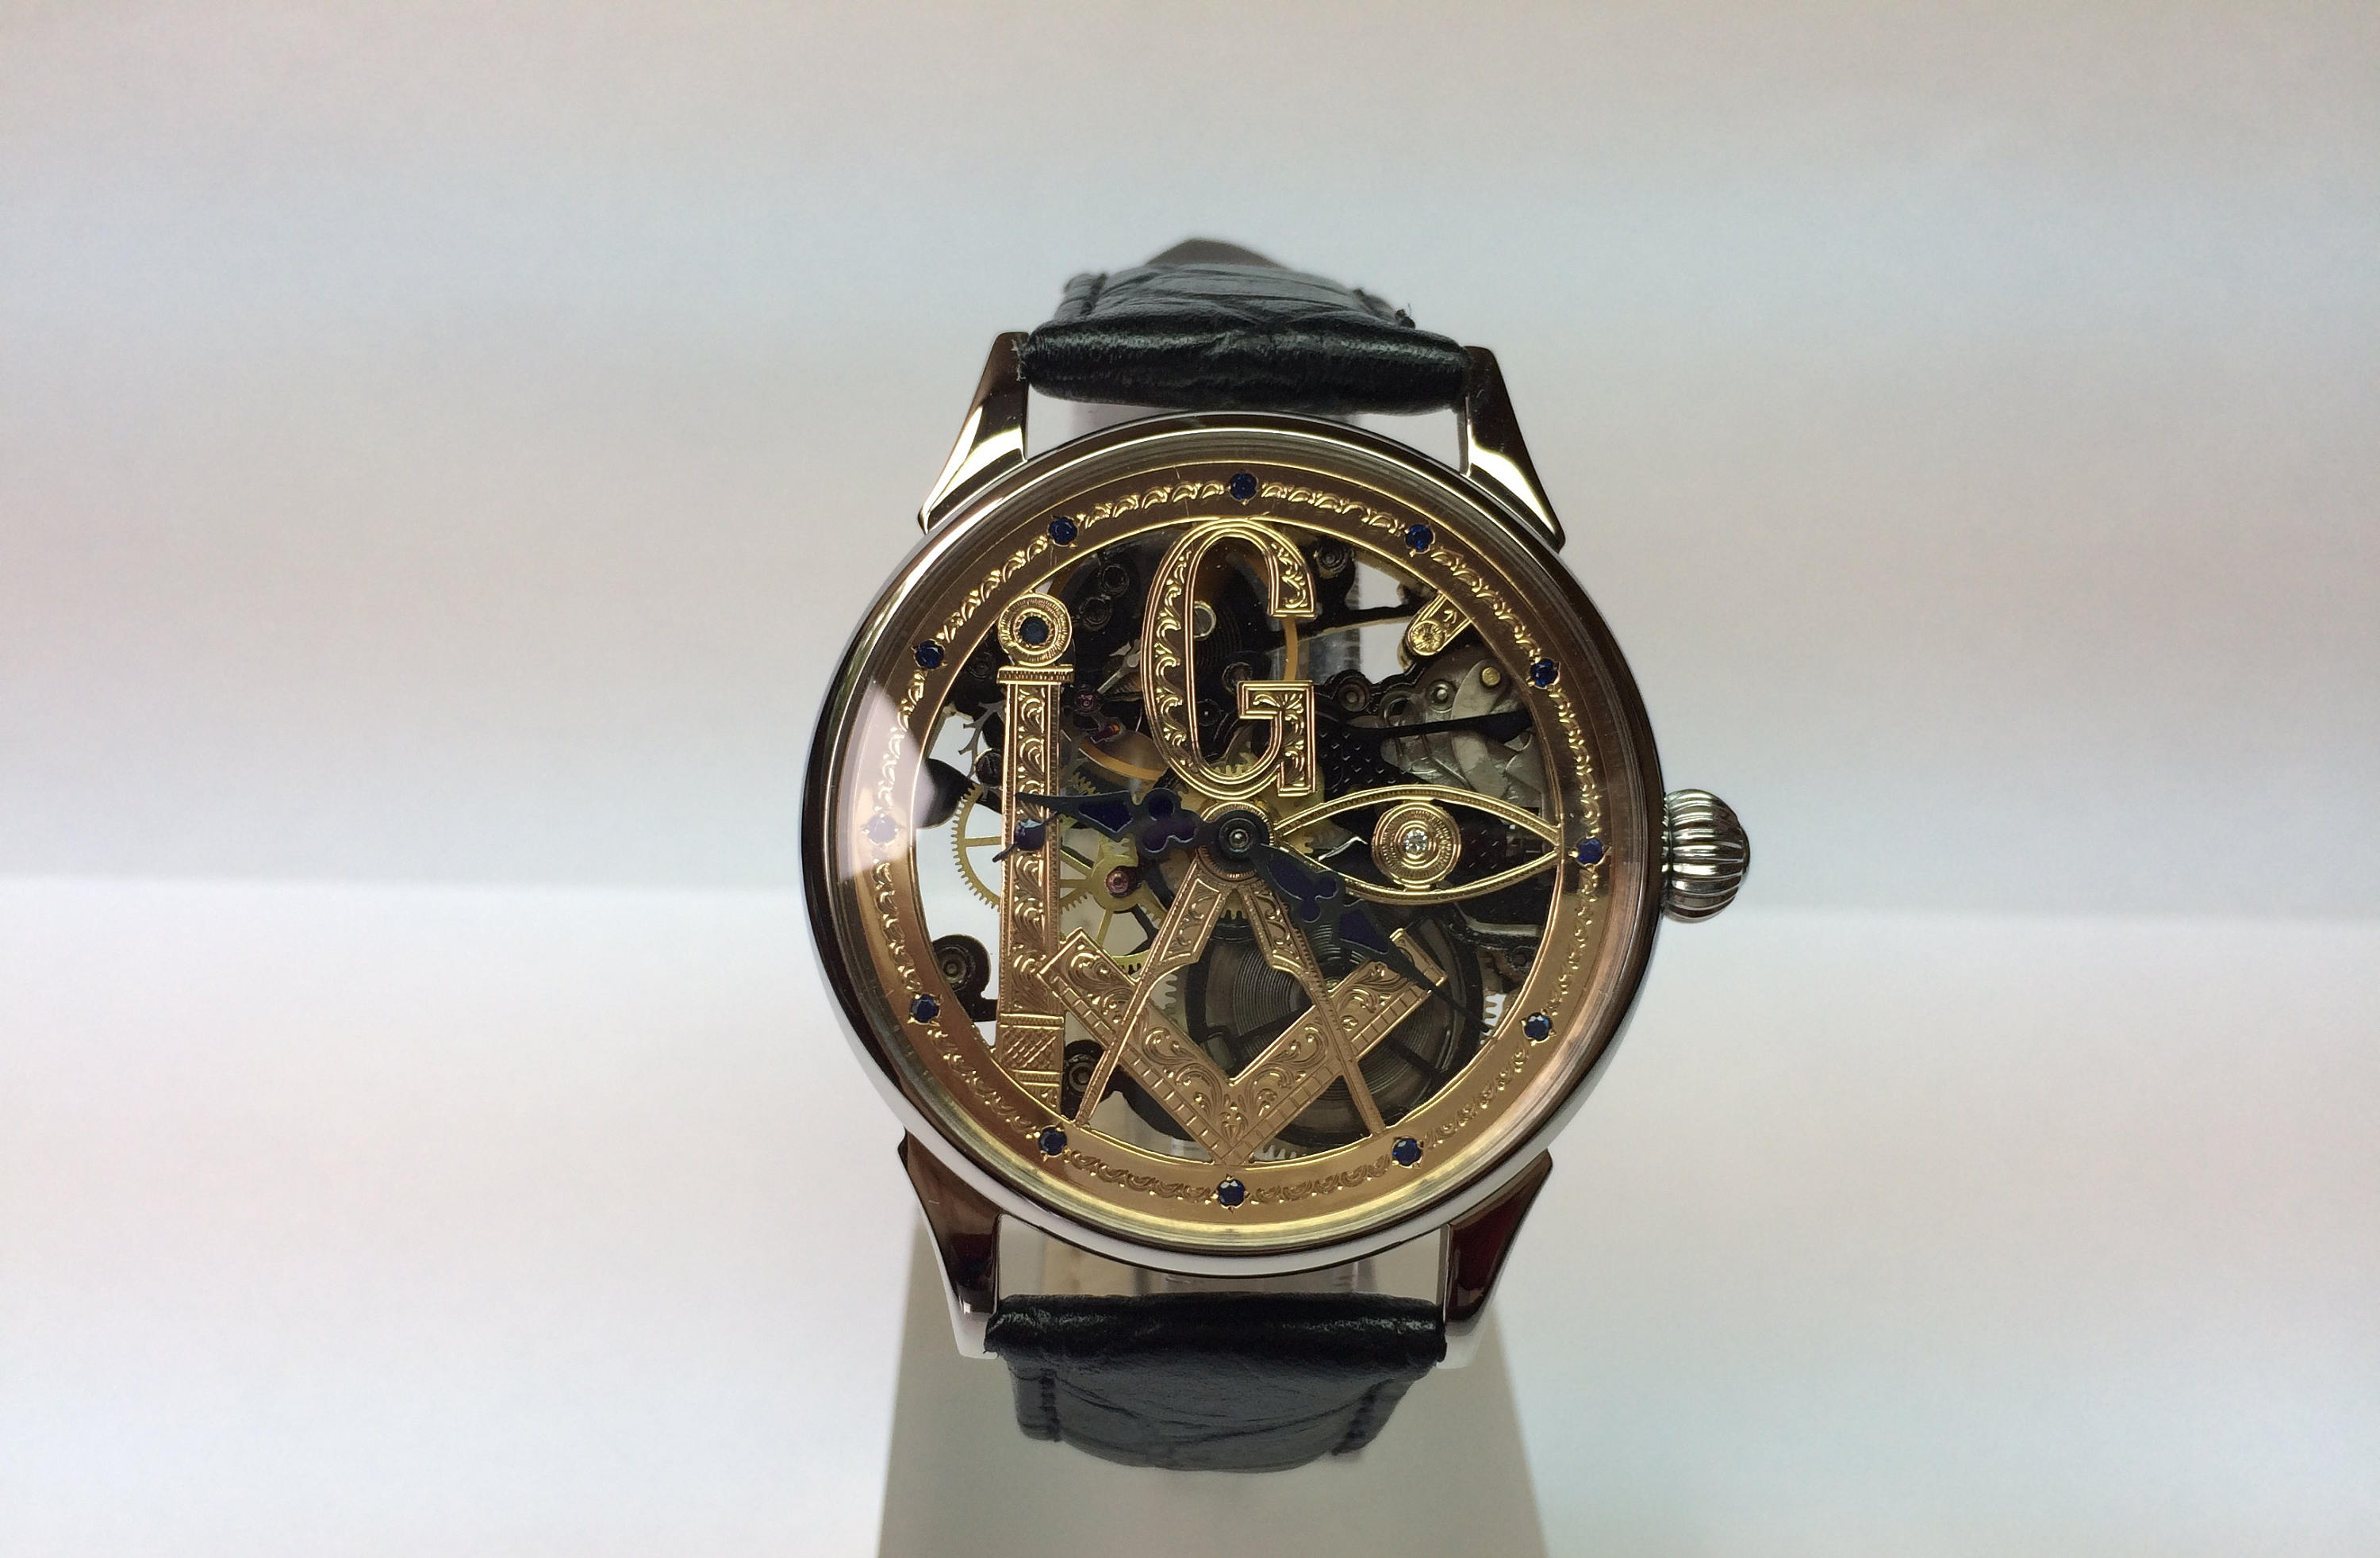 Hand engraved watch masonic skeleton. Mechanical movement | Etsy